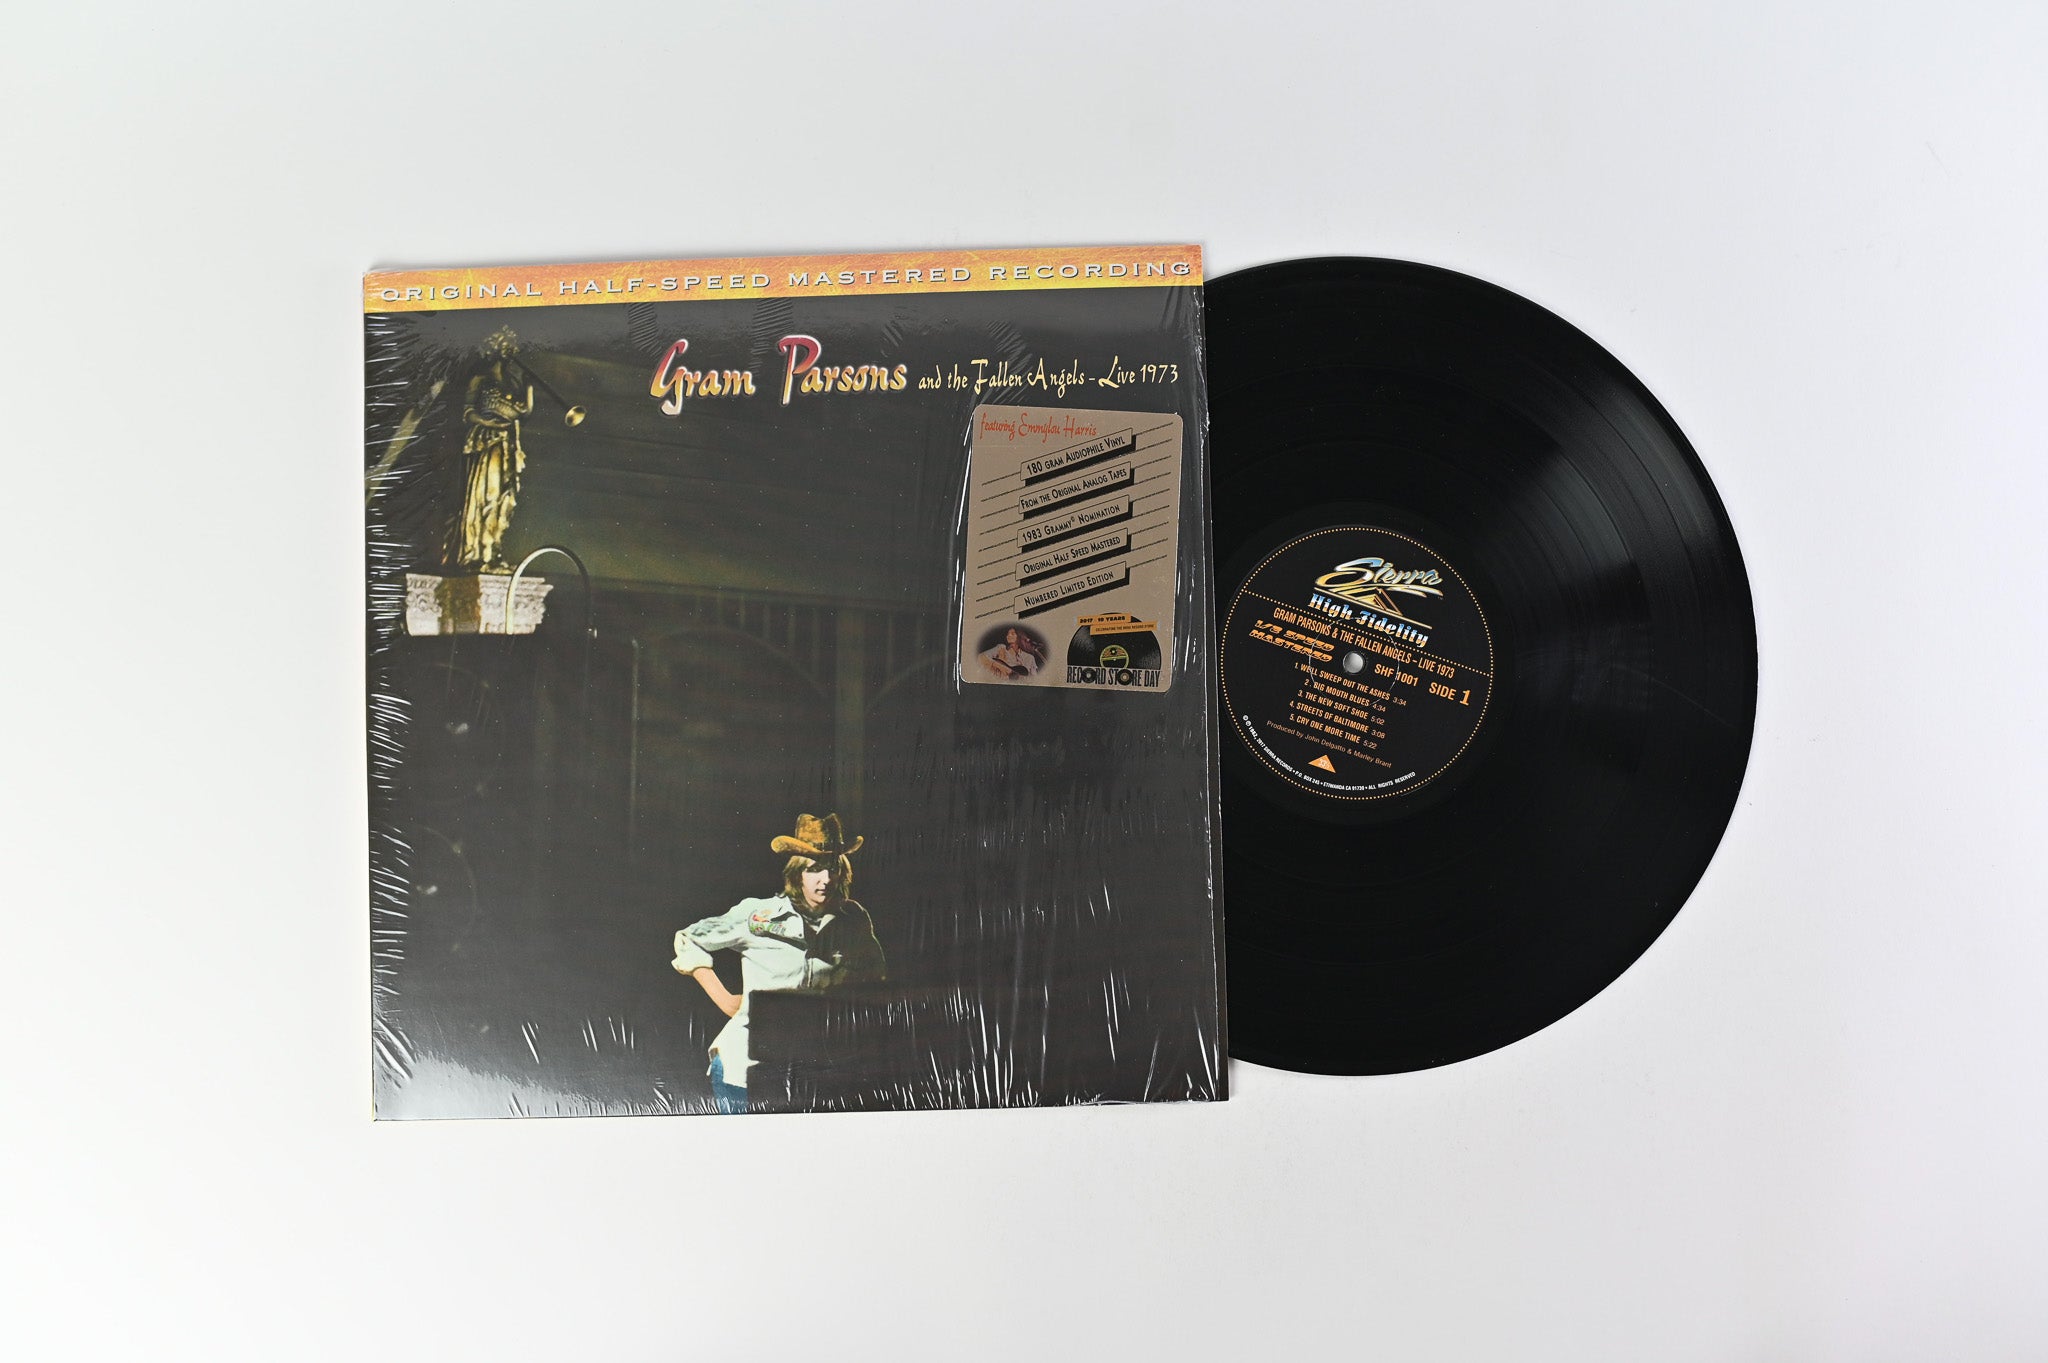 Gram Parsons & The Fallen Angels - Live 1973 on Sierra RSD Black Friday 2017 Ltd Numbered Reissue